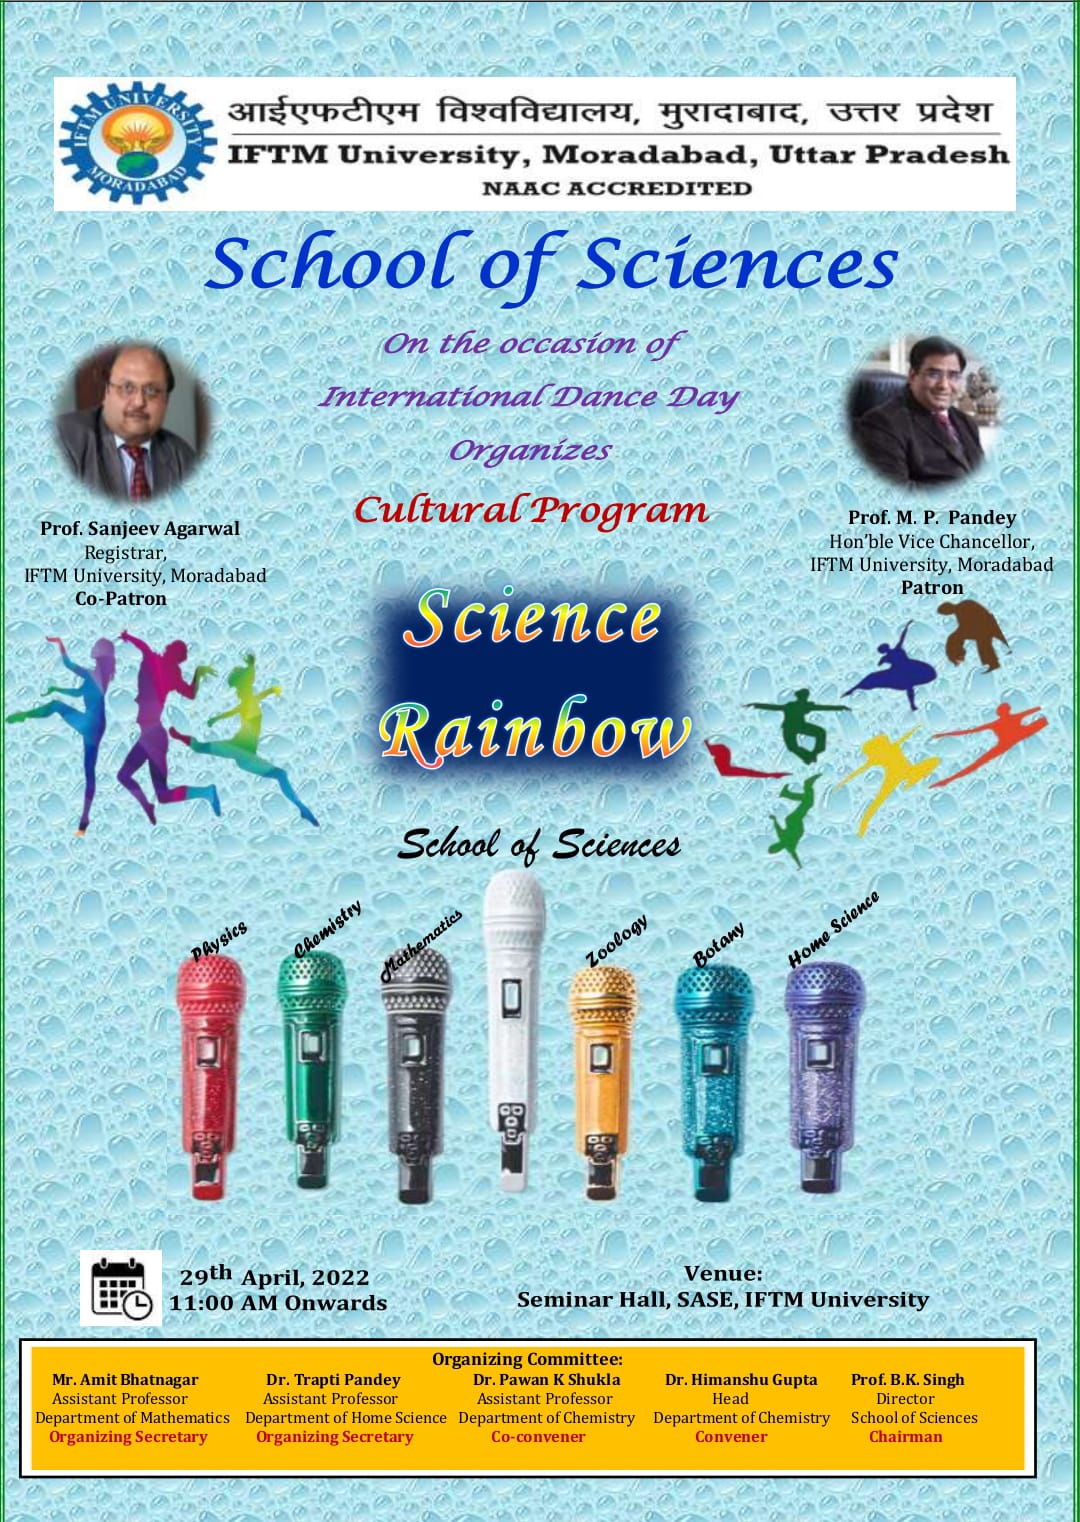 Cultural Program-Science Rainbow